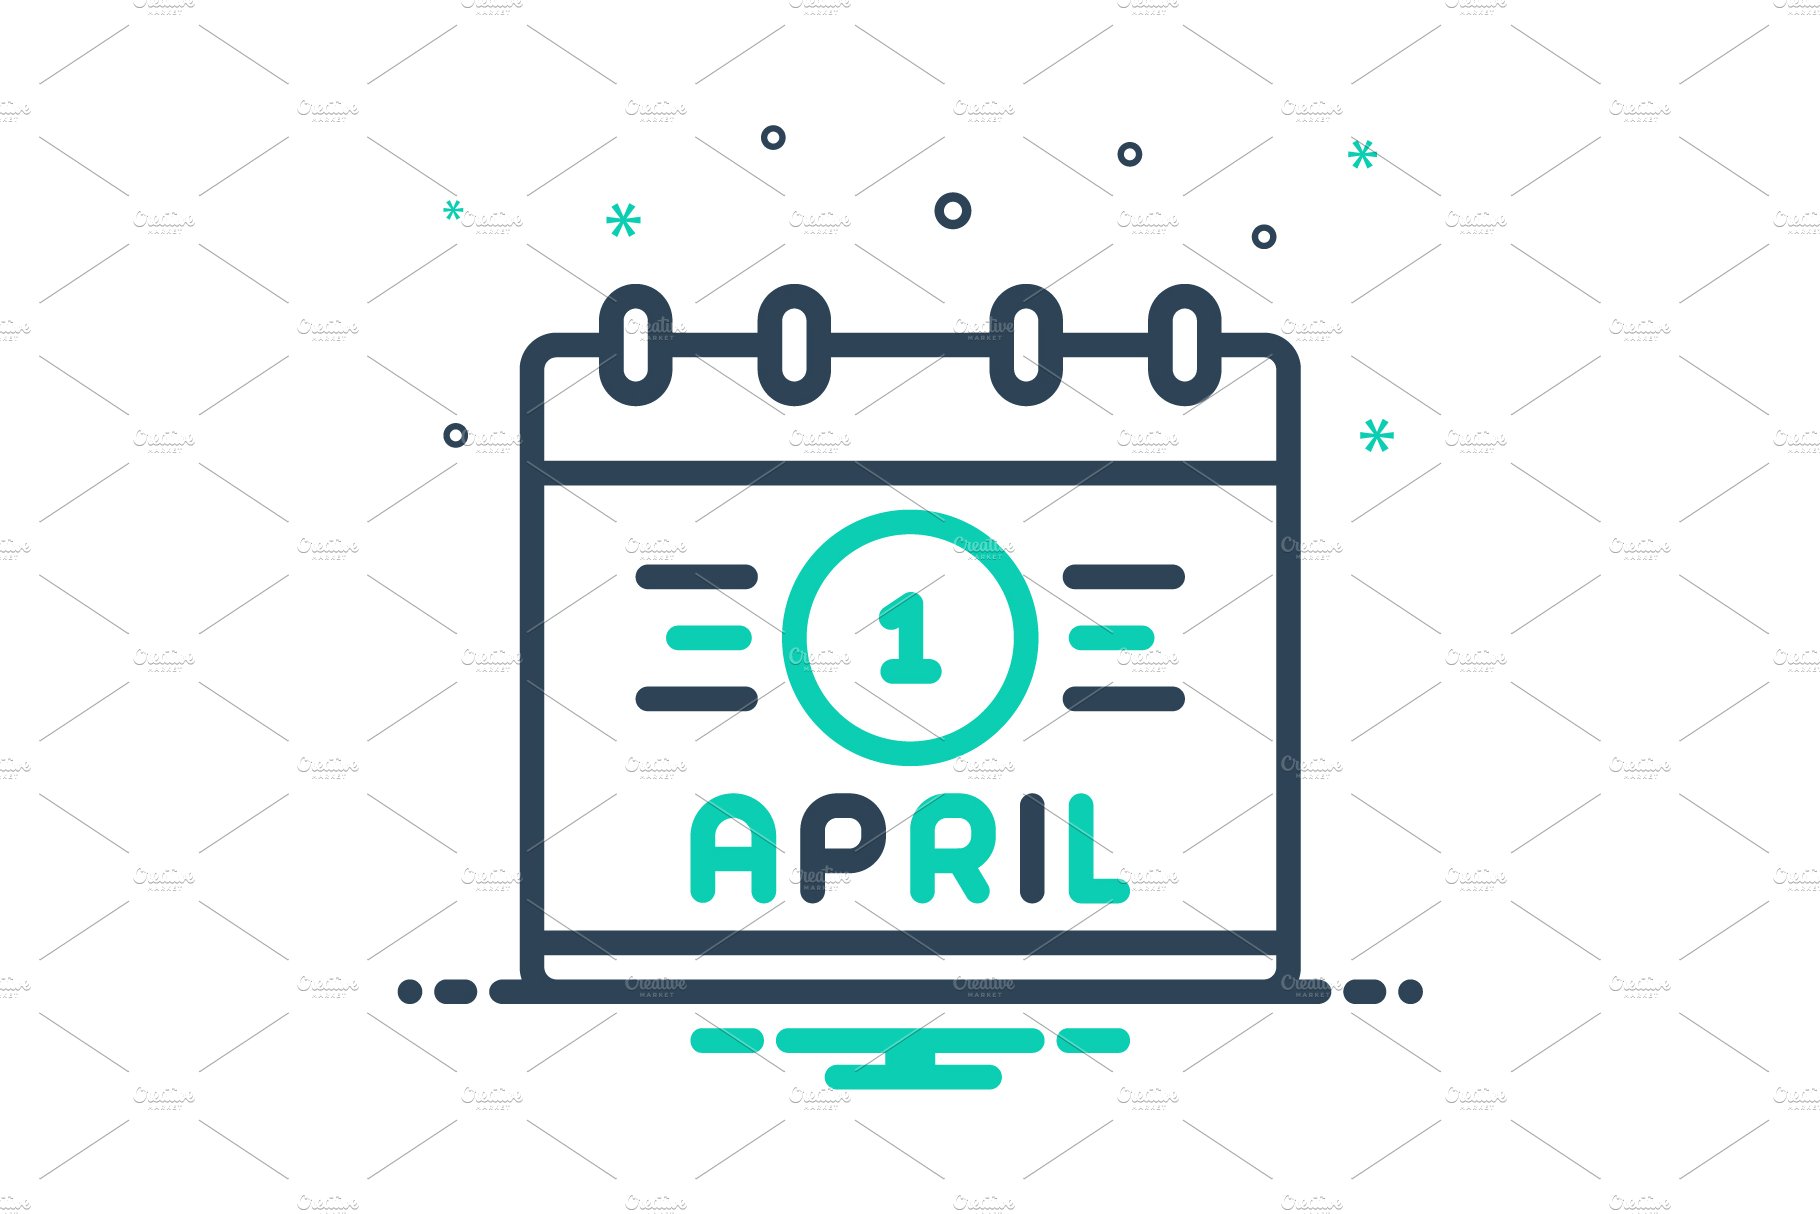 April calendar mix icon cover image.